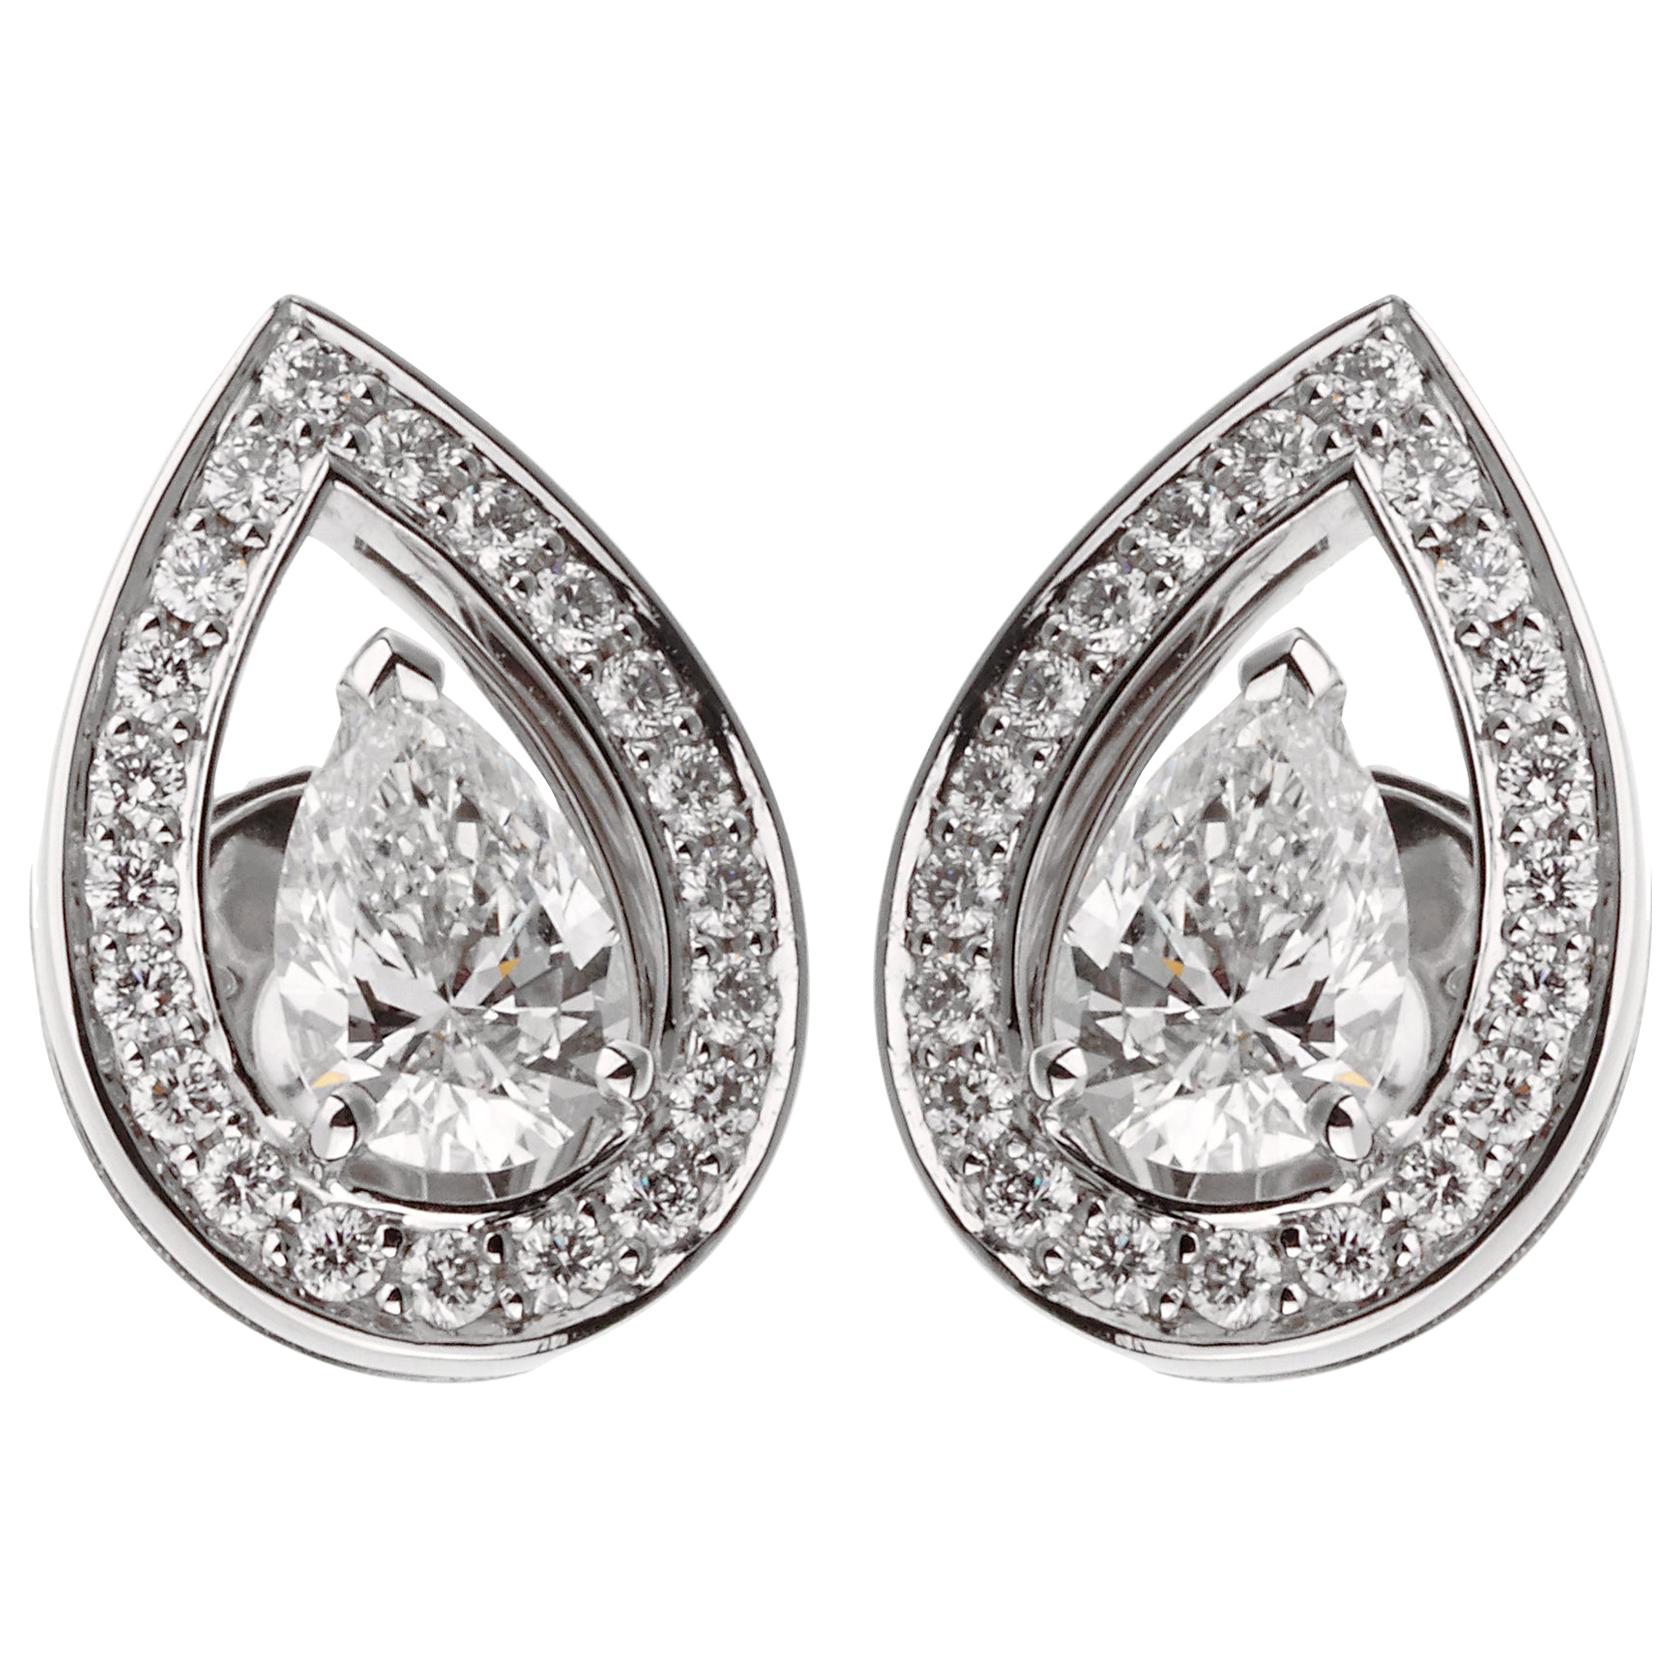 Fred of Paris Lovelight GIA Certified Pear Shaped Diamond Stud Earrings For Sale